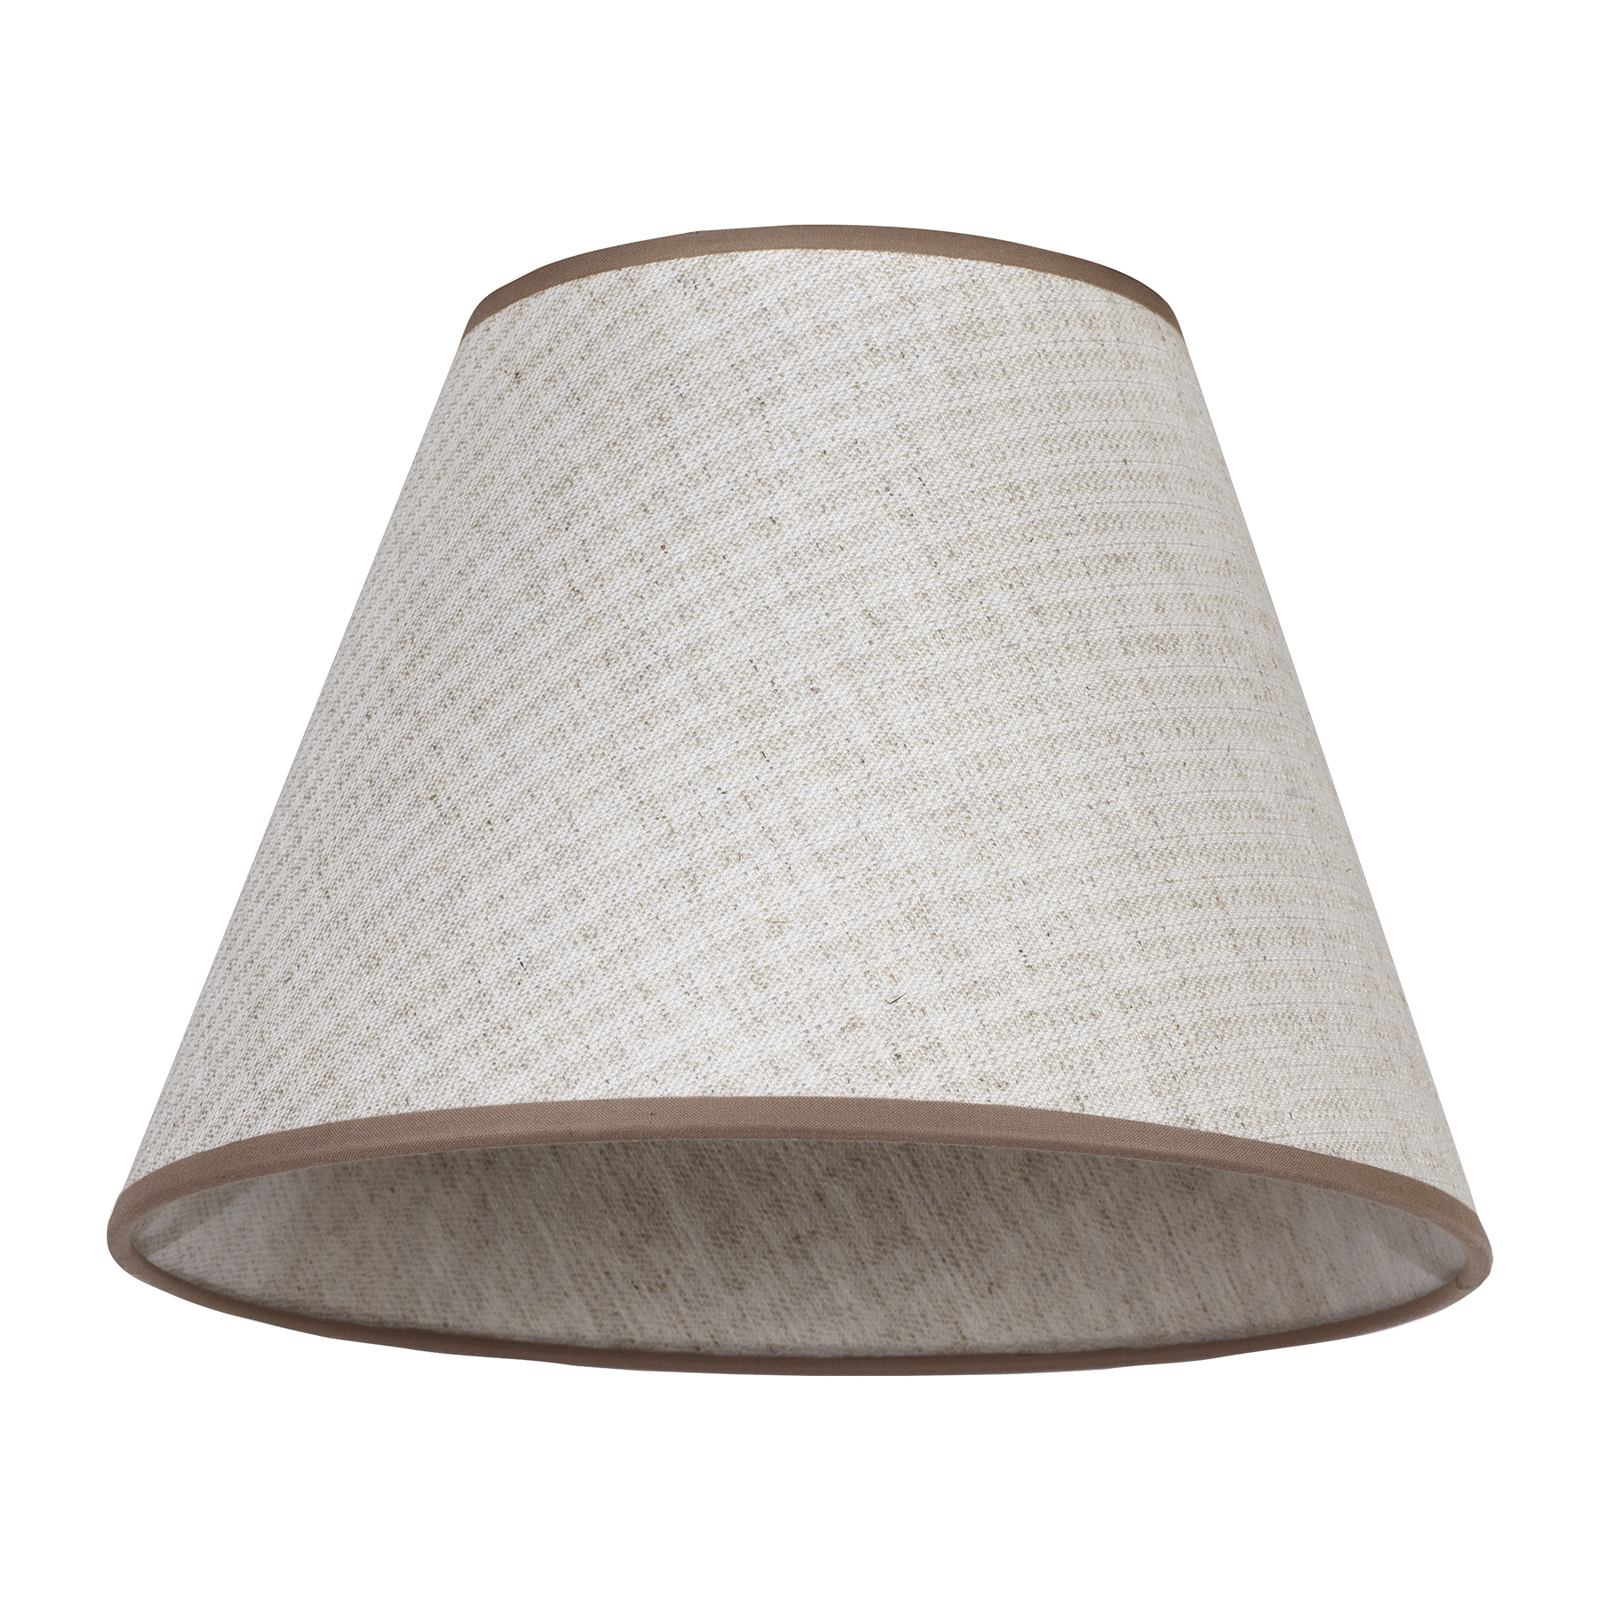 Mini Romance lampshade for floor lamp, ecru